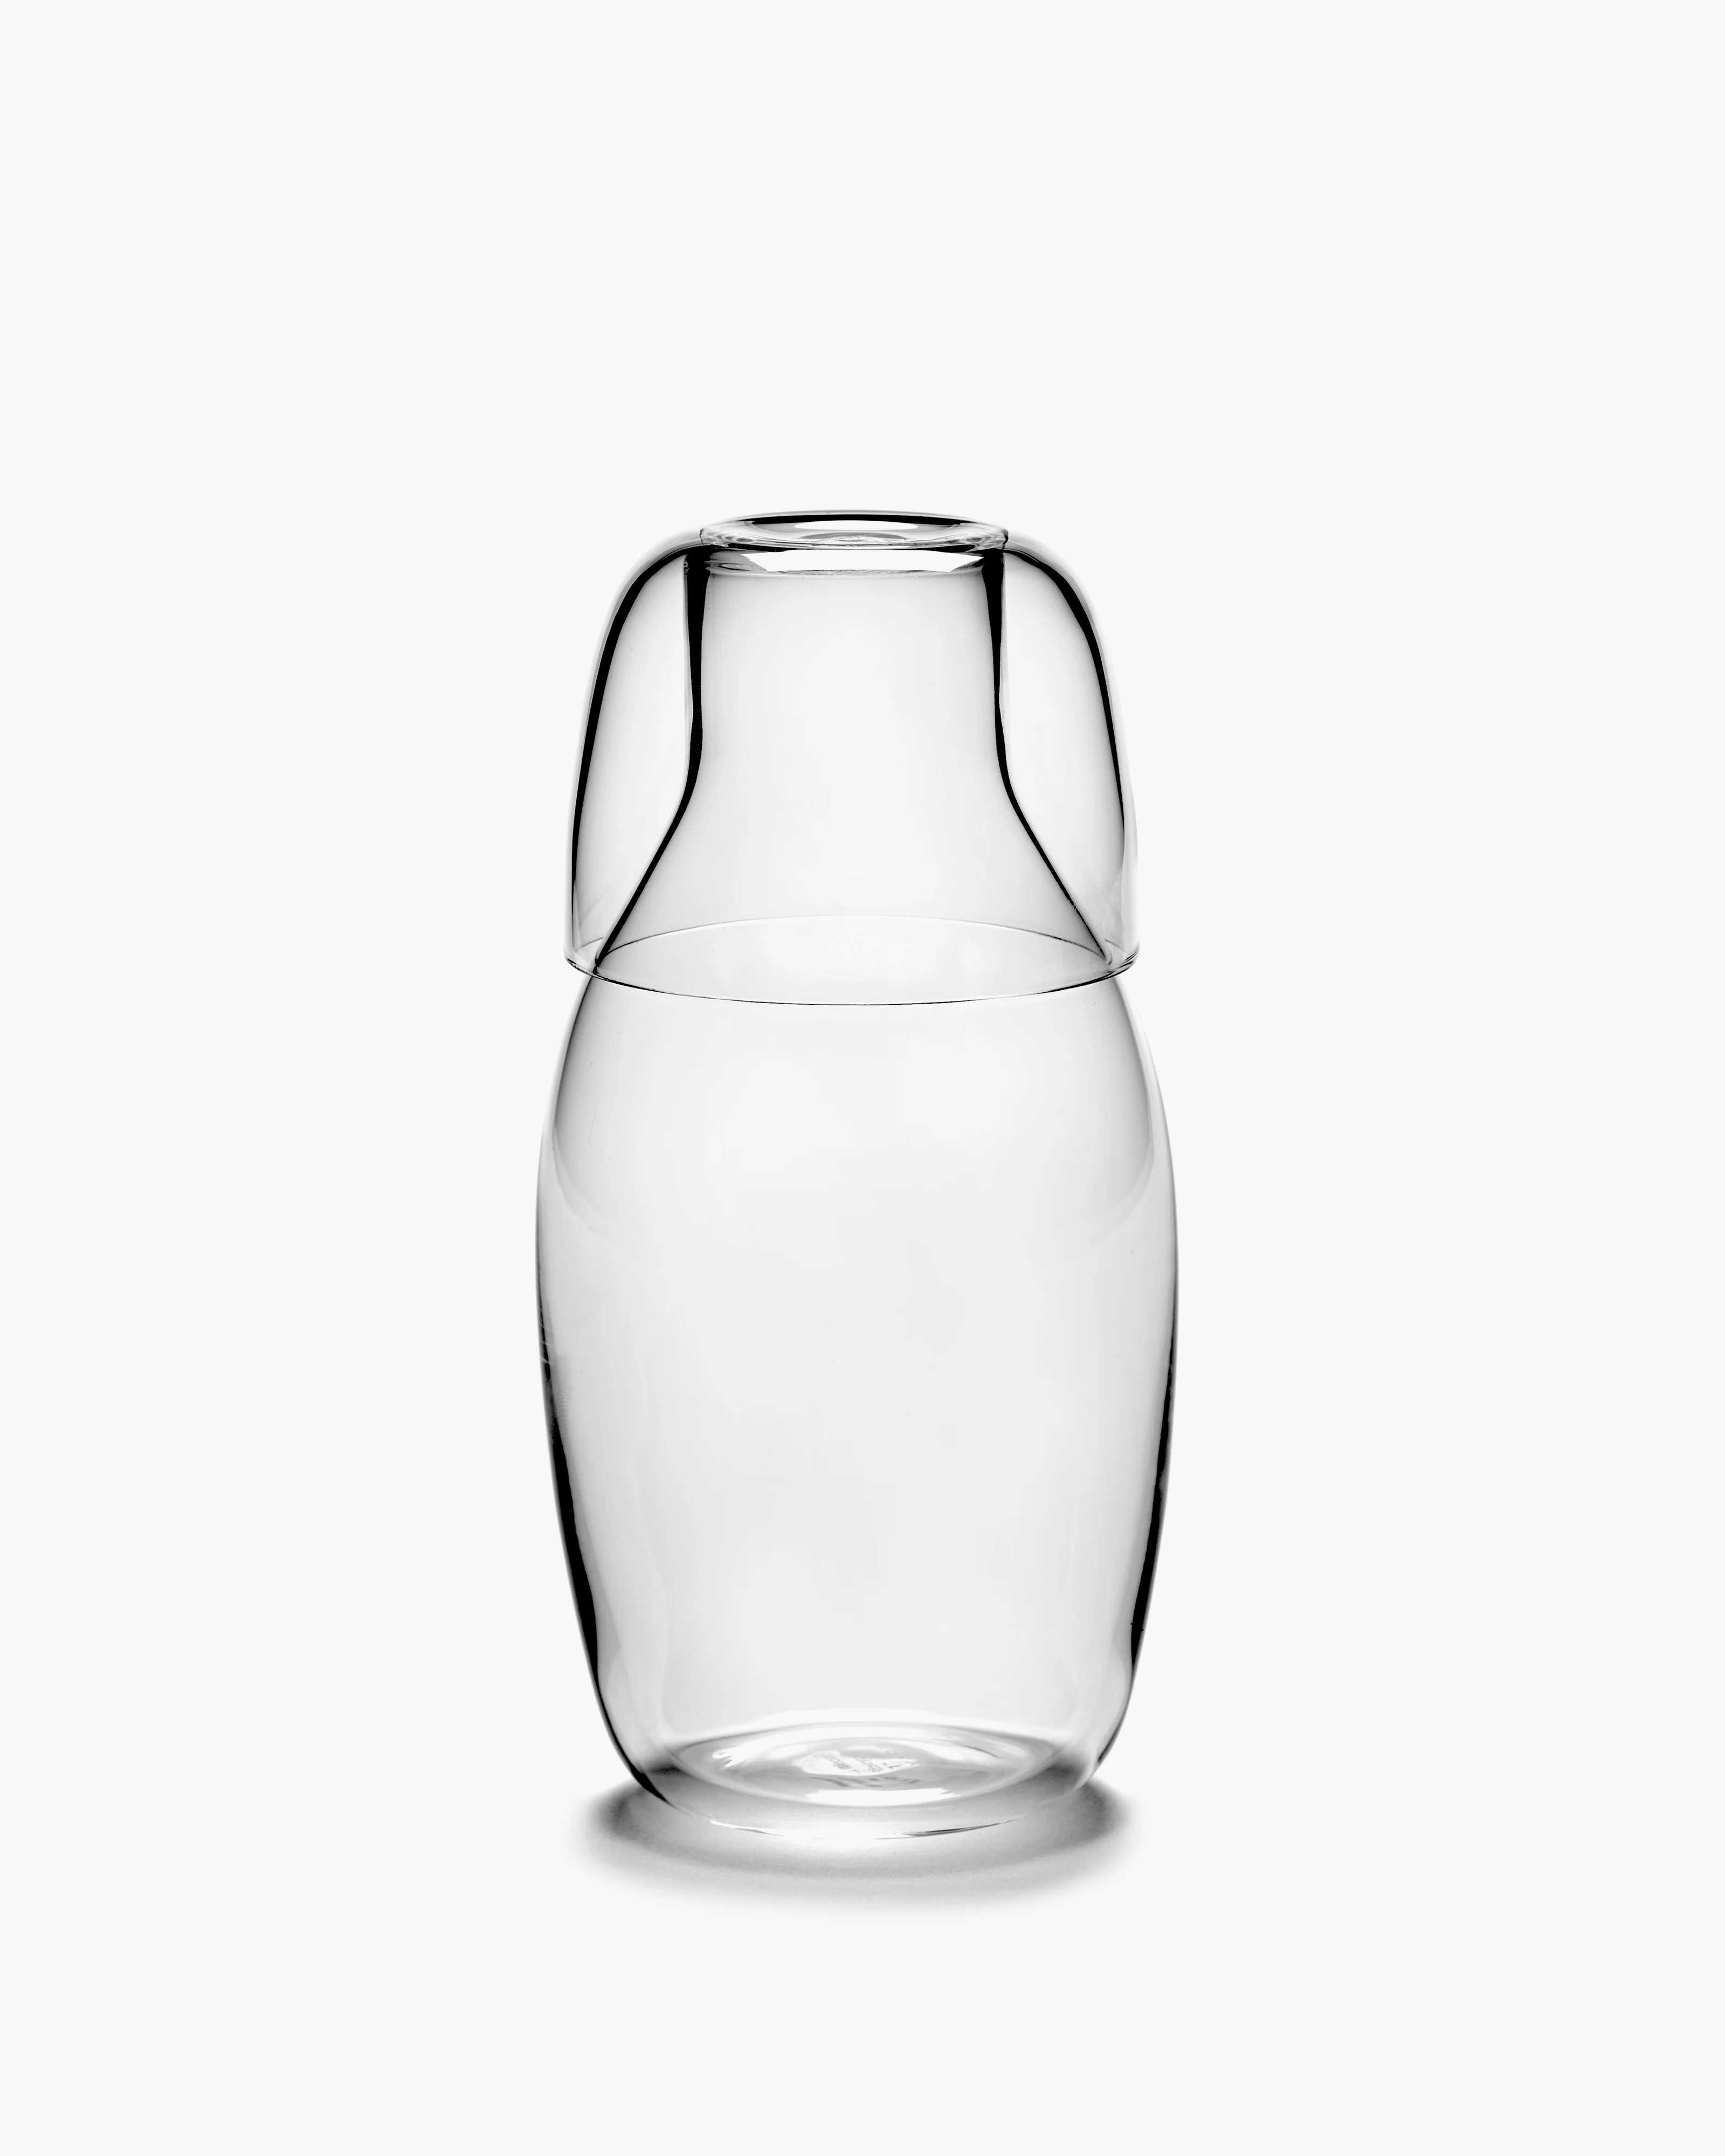 SERAX Carafe with glass transparent Passe-partout